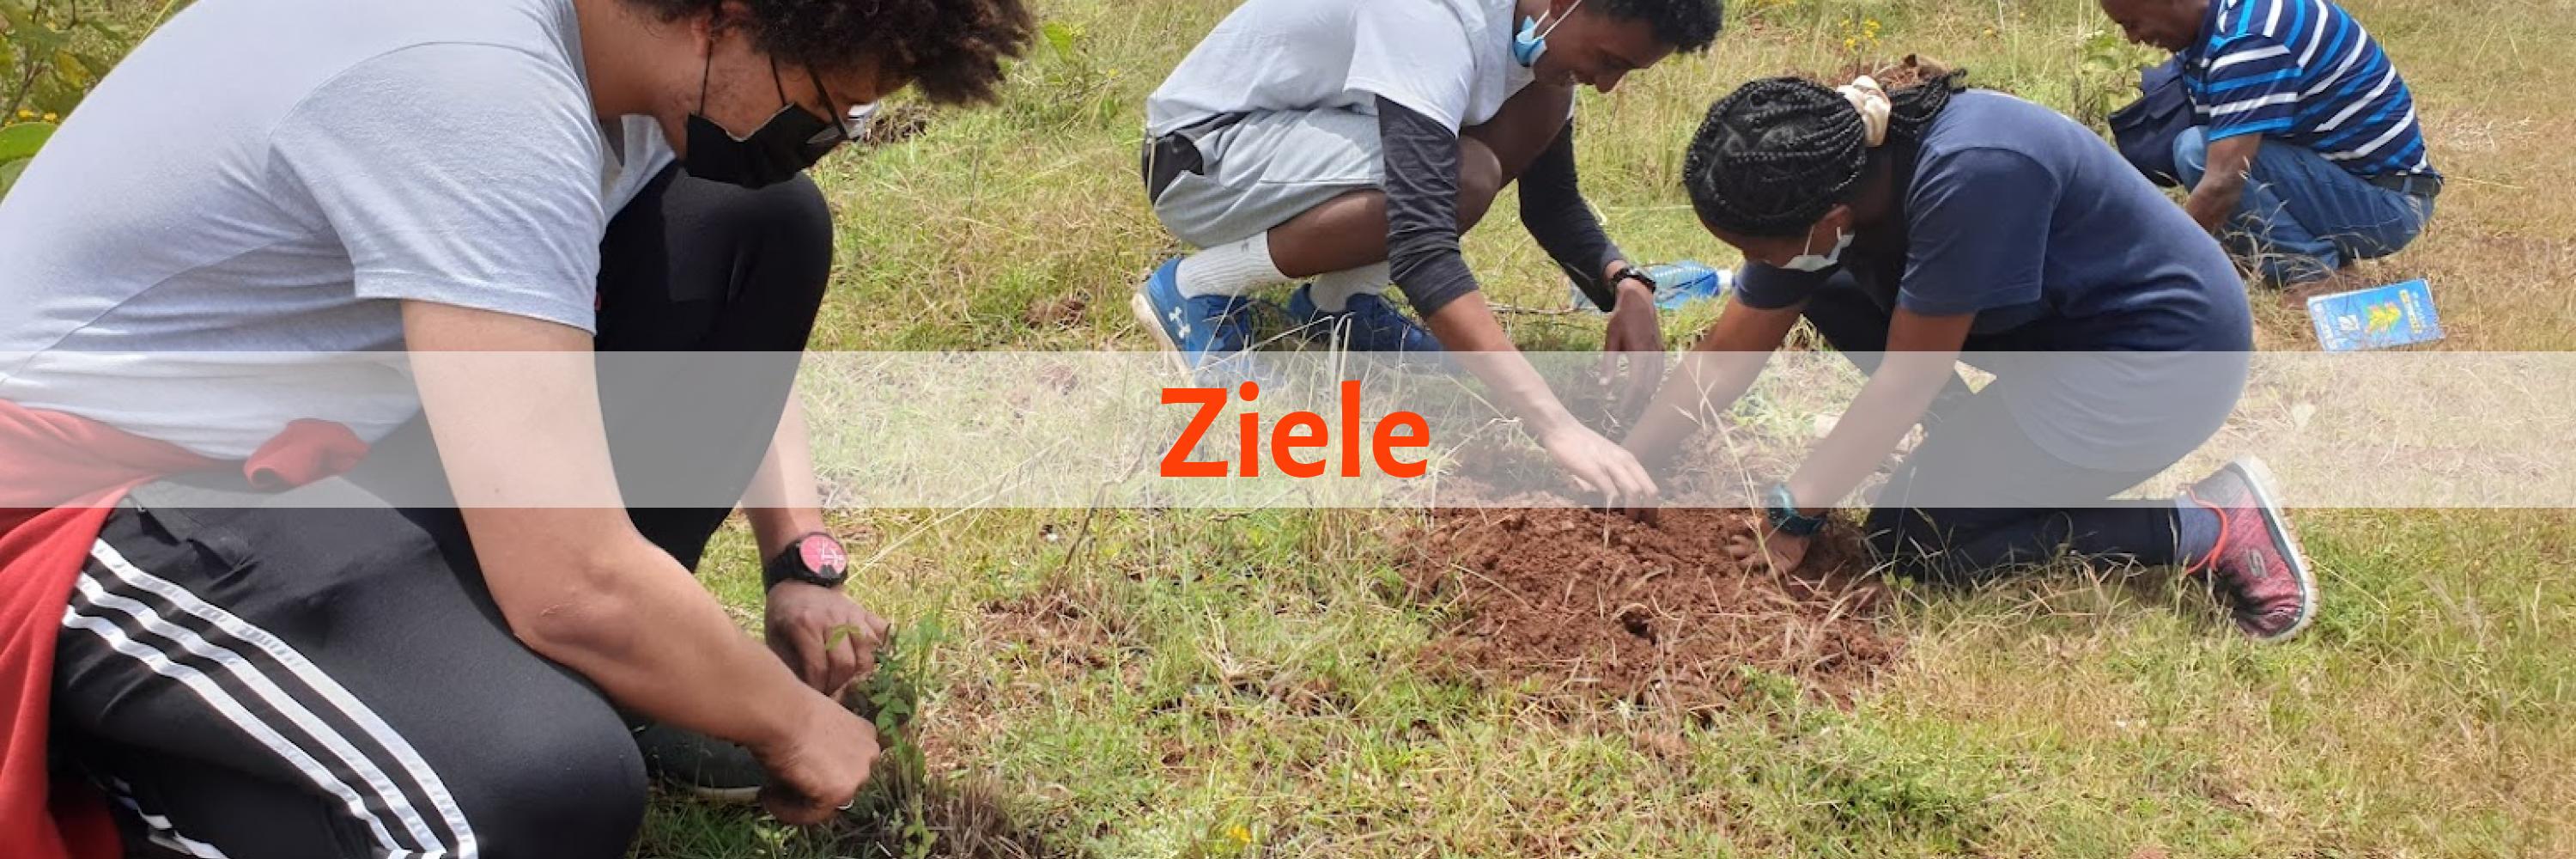 young people planting seedlings in Ethiopia.